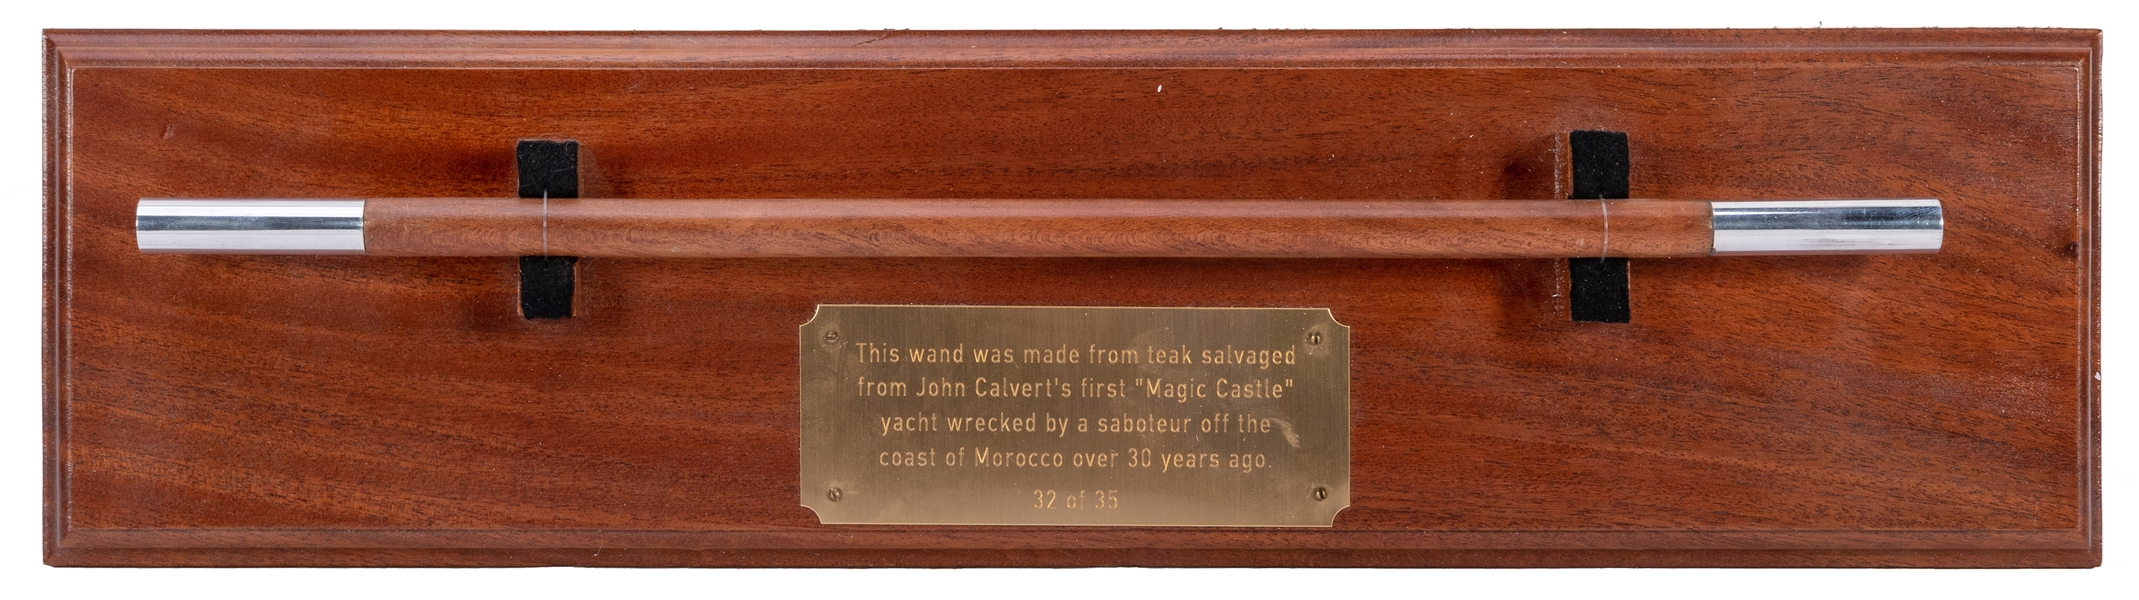 John Calvert Magic Wand from Salvaged Yacht.